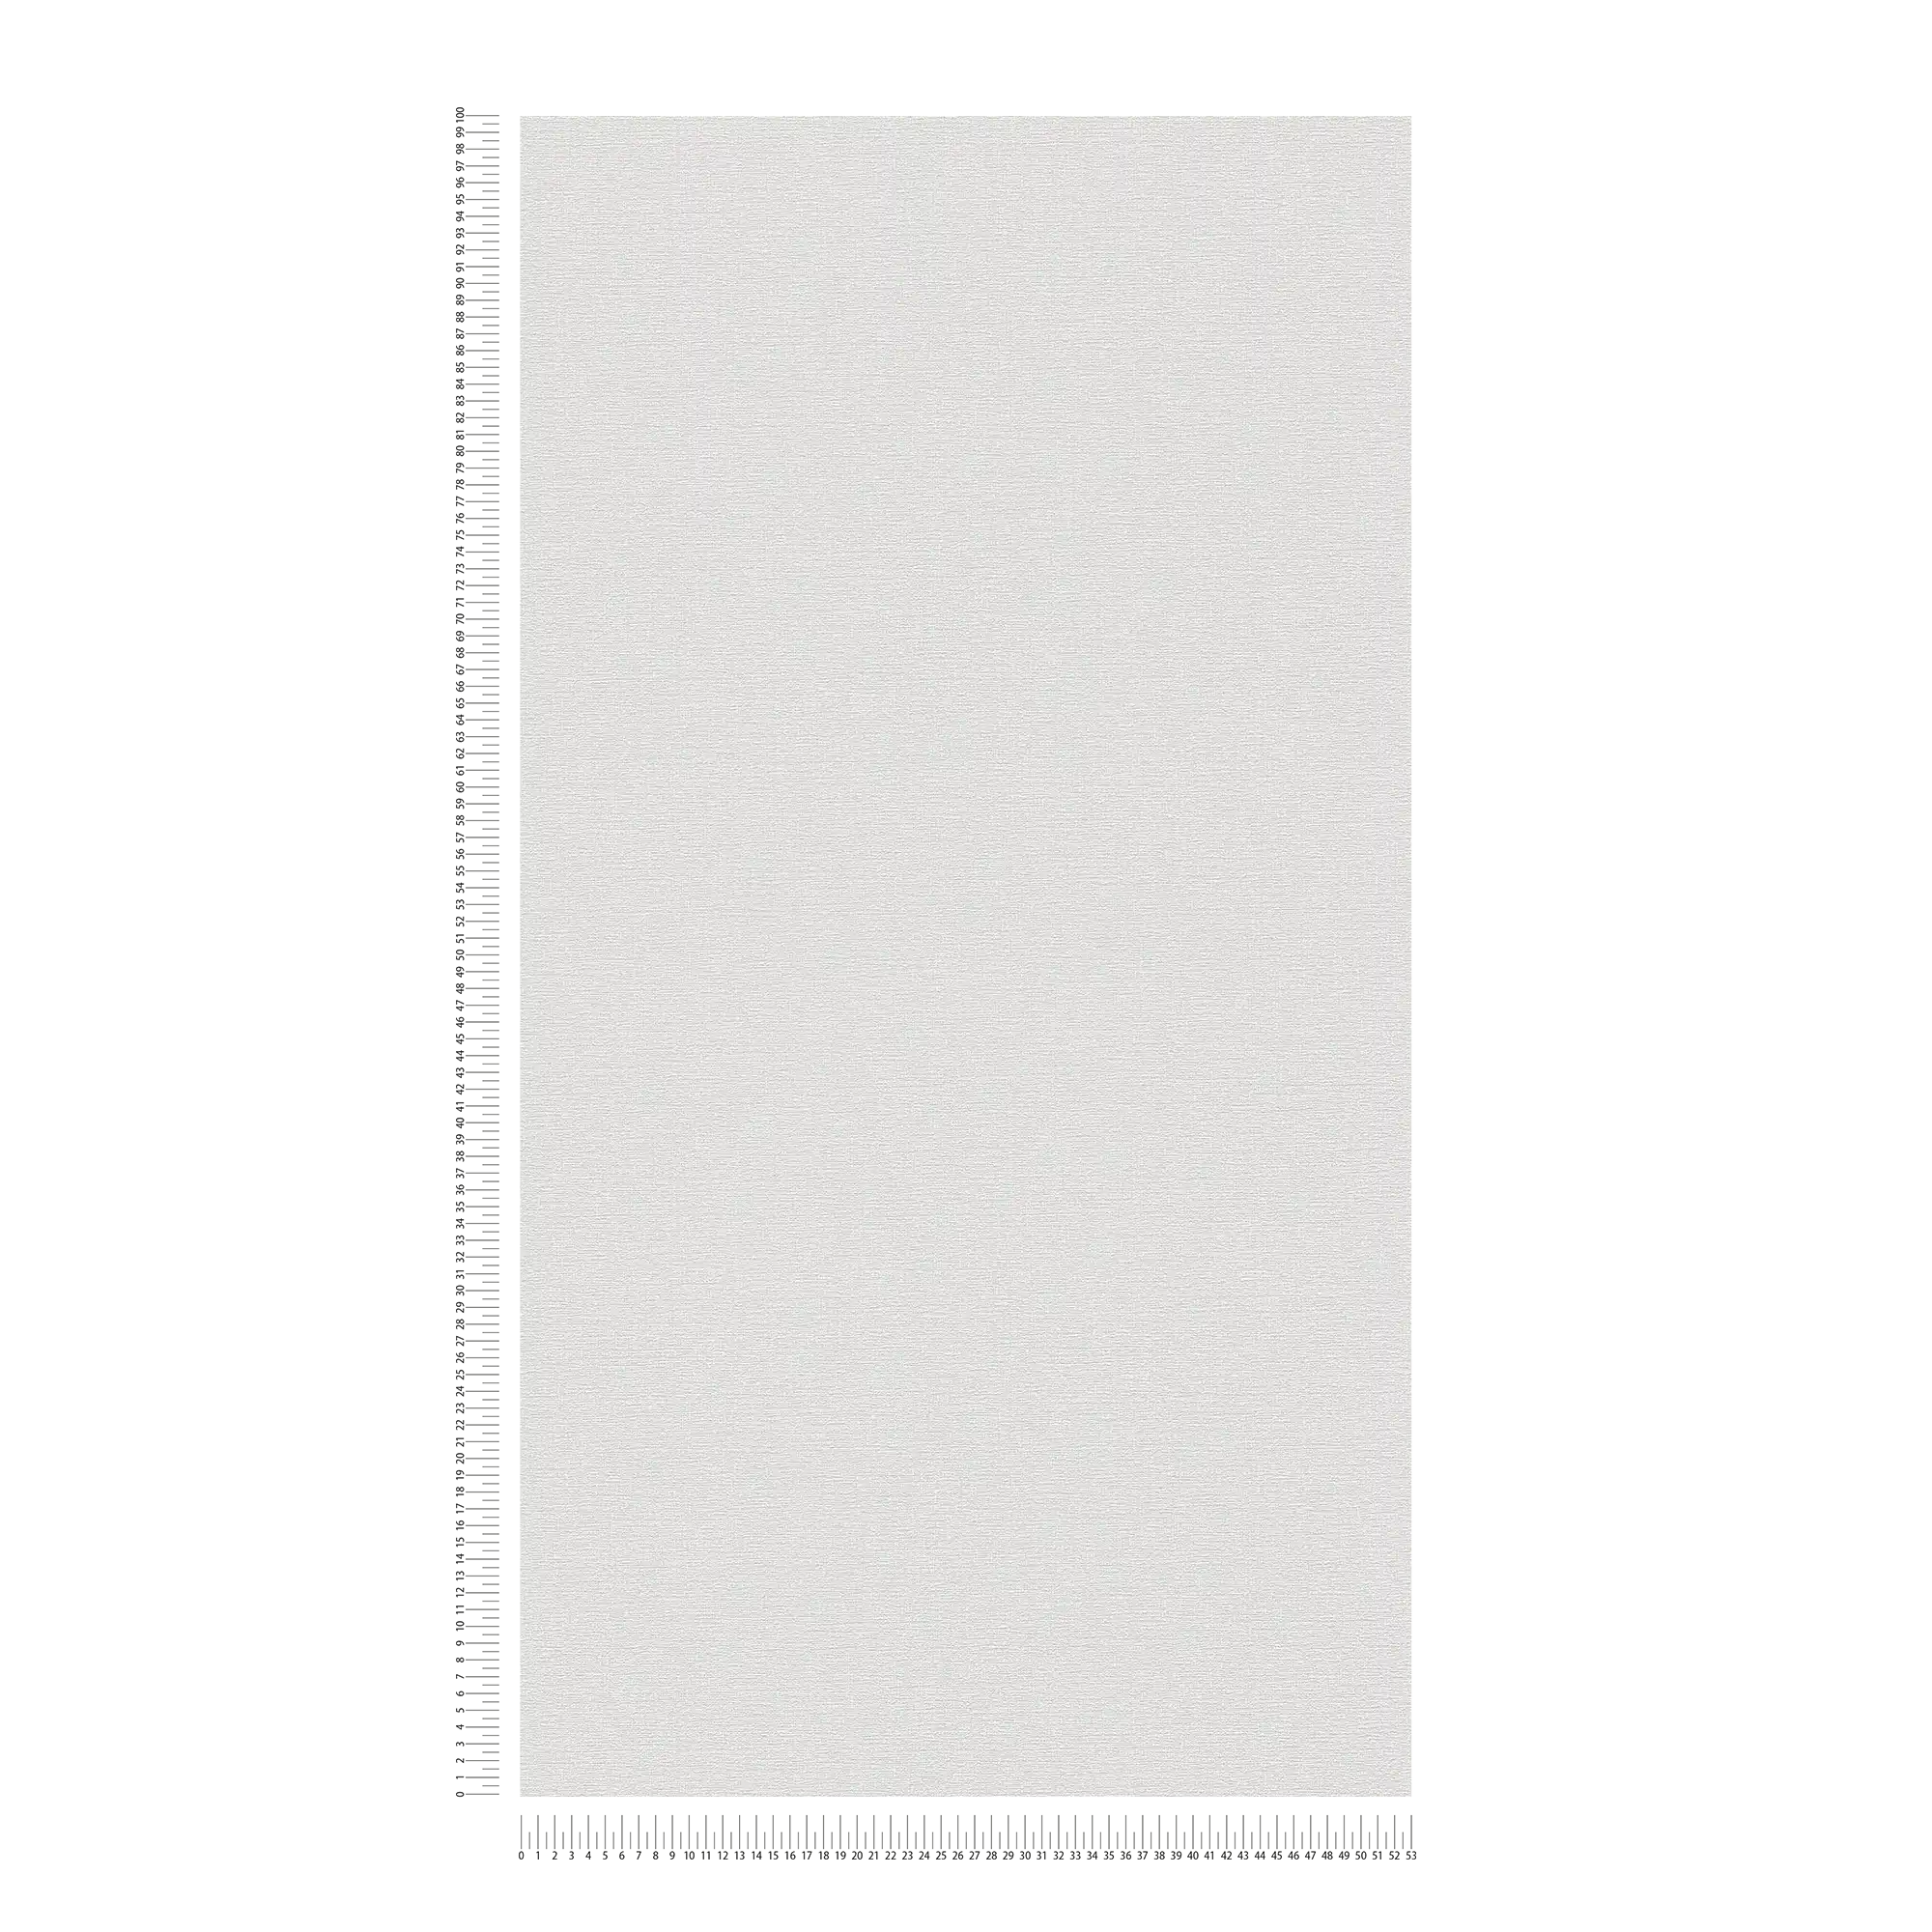             Single-coloured plain wallpaper soft shade - grey
        